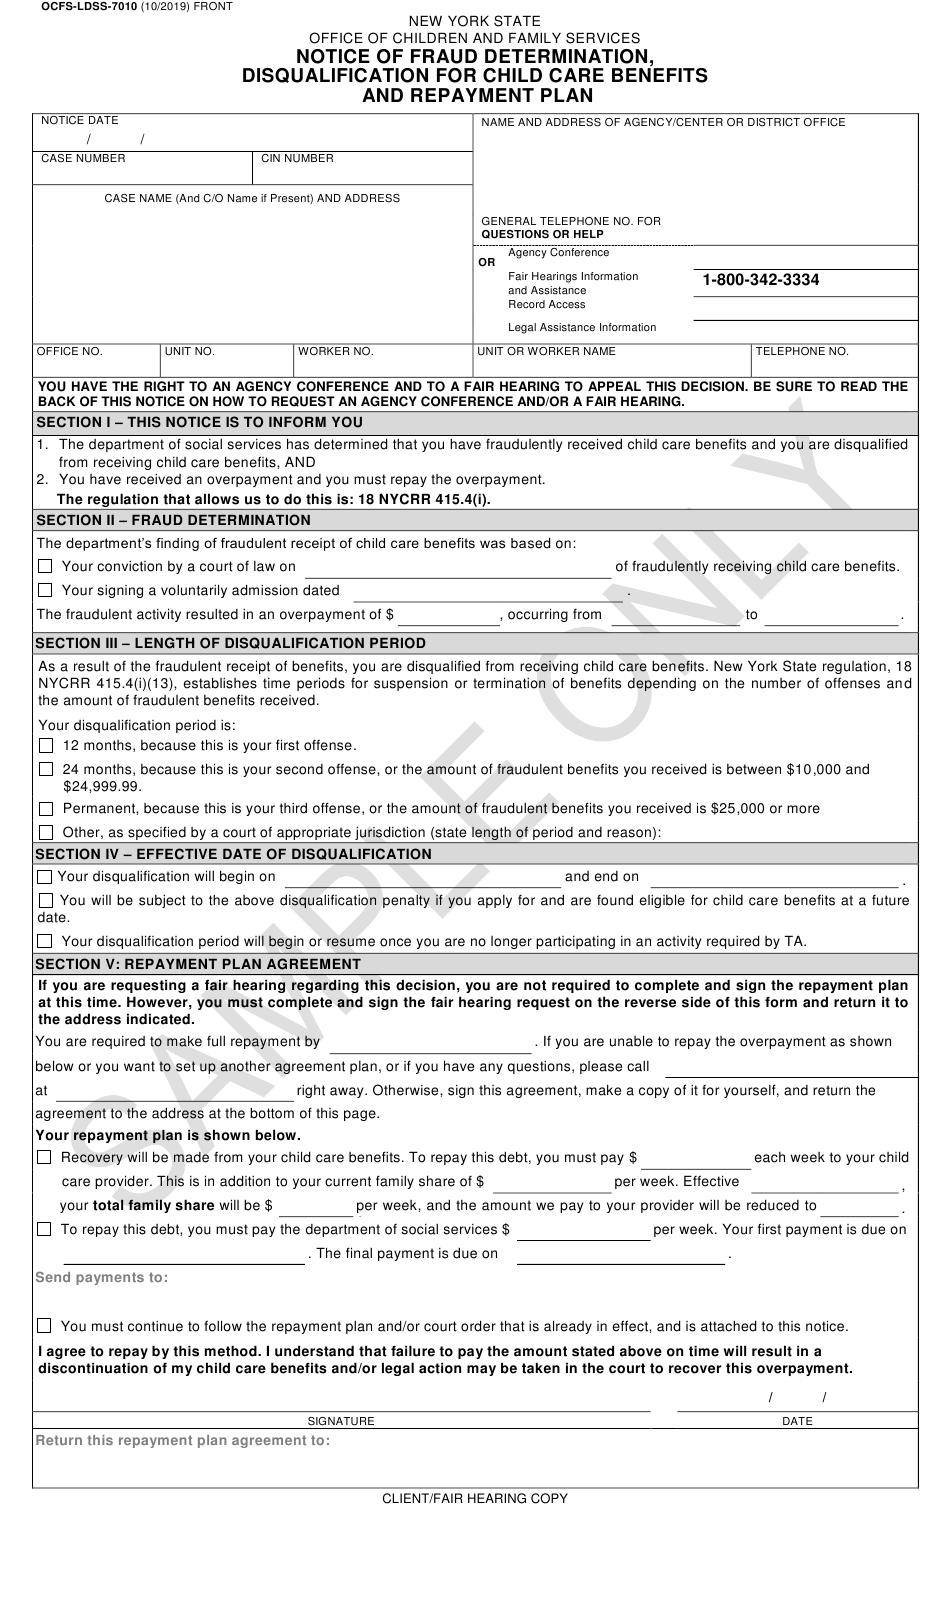 Sample Form OCFS LDSS 7010 Download Printable PDF Or Fill Online Notice 